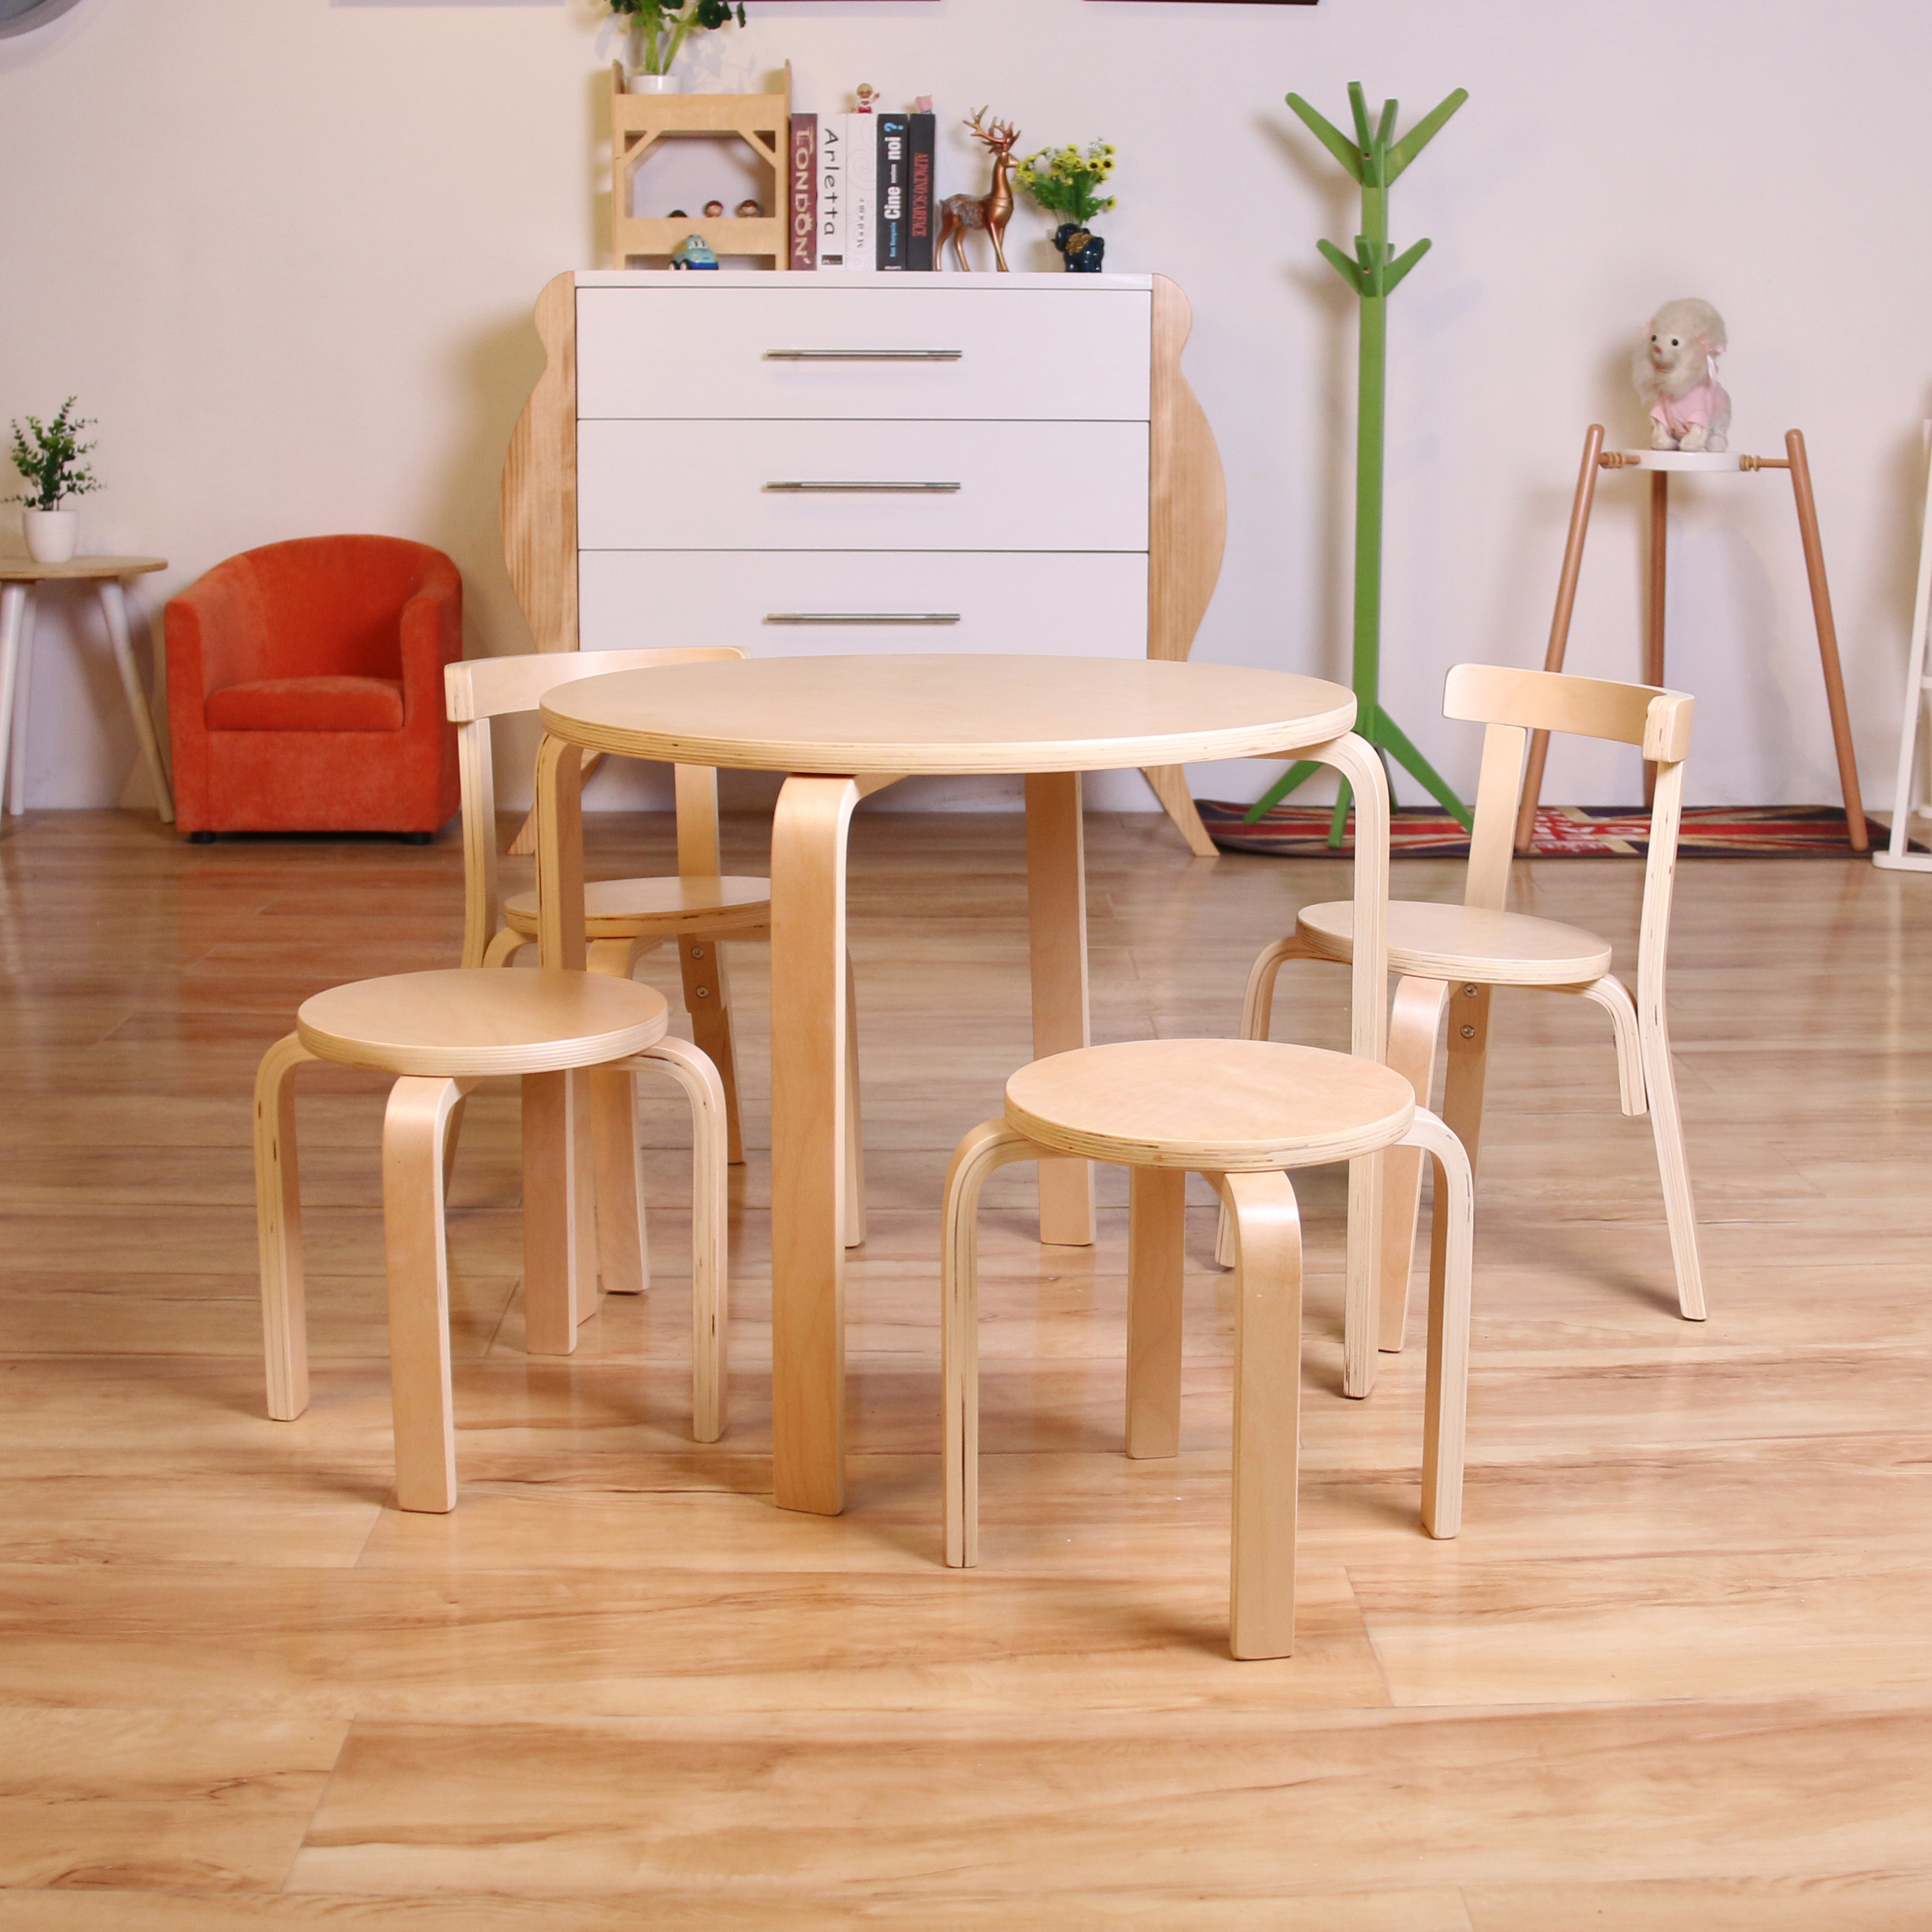 Nashow LMMS-057 Larabee Kids Furniture Set Preschool Table, Chair and Stool